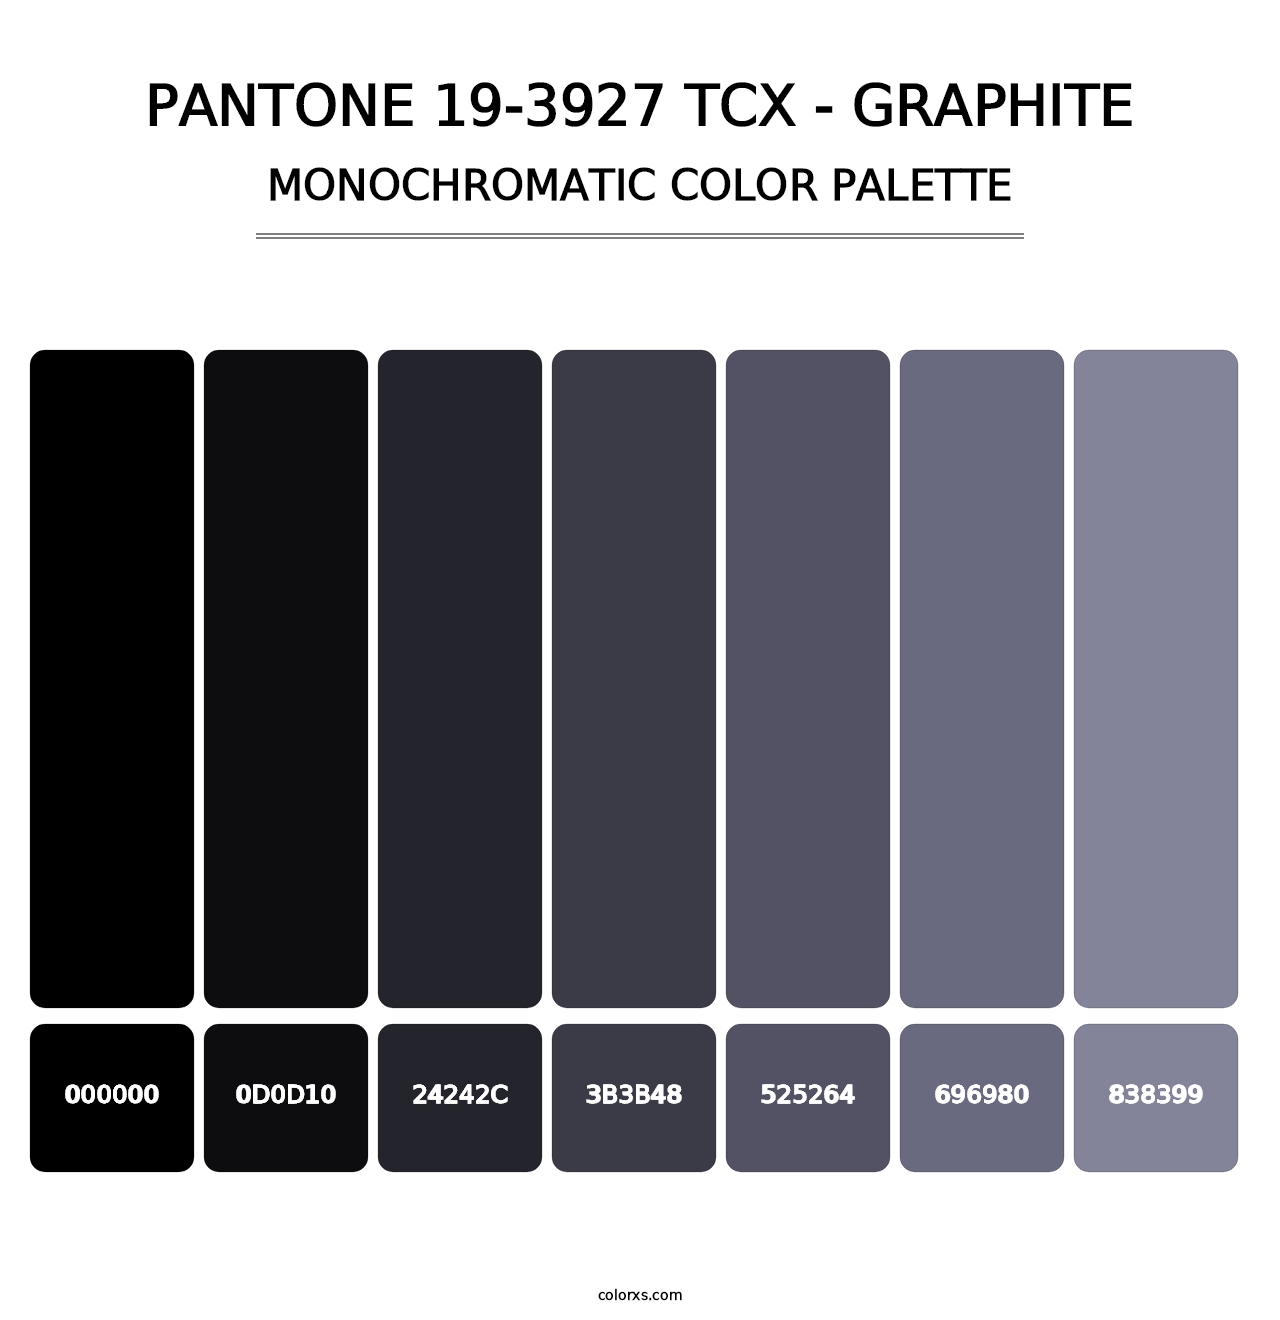 PANTONE 19-3927 TCX - Graphite - Monochromatic Color Palette